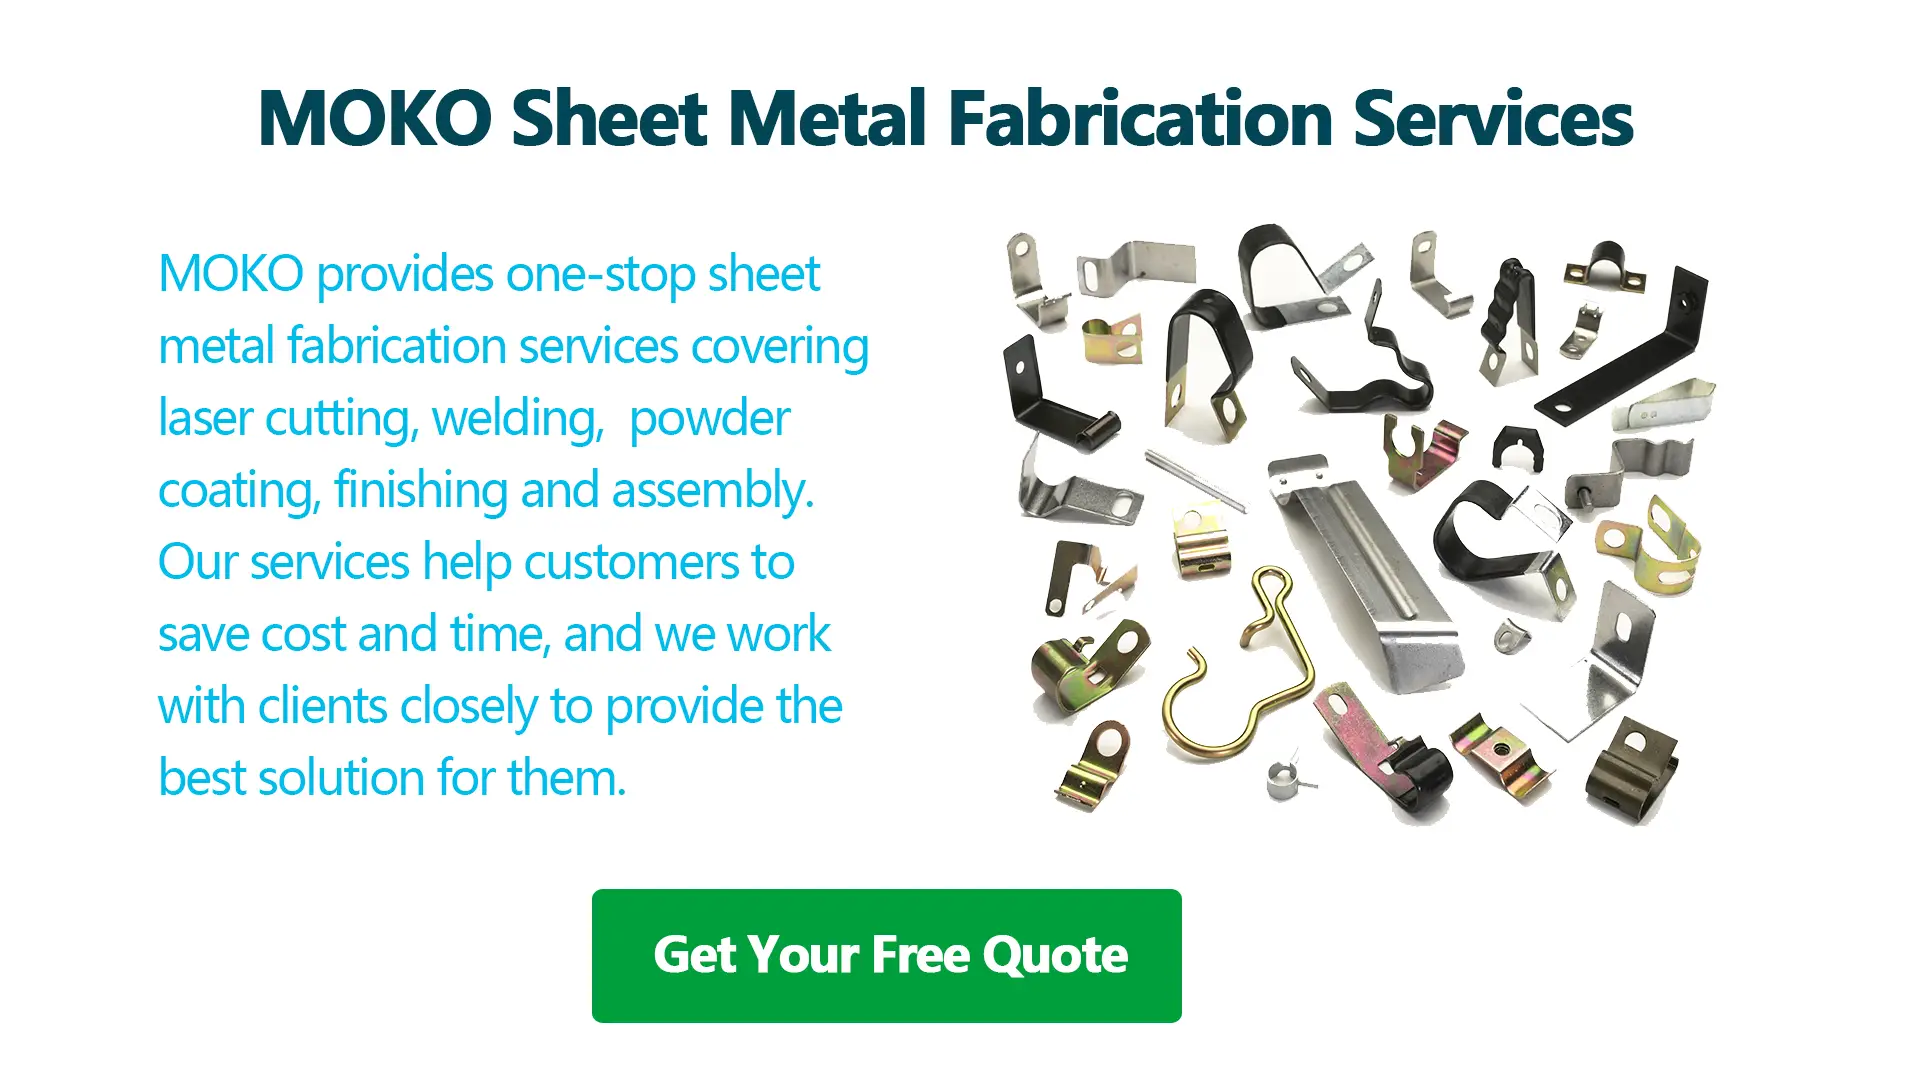 MOKO Sheet Metal Fabrication Services